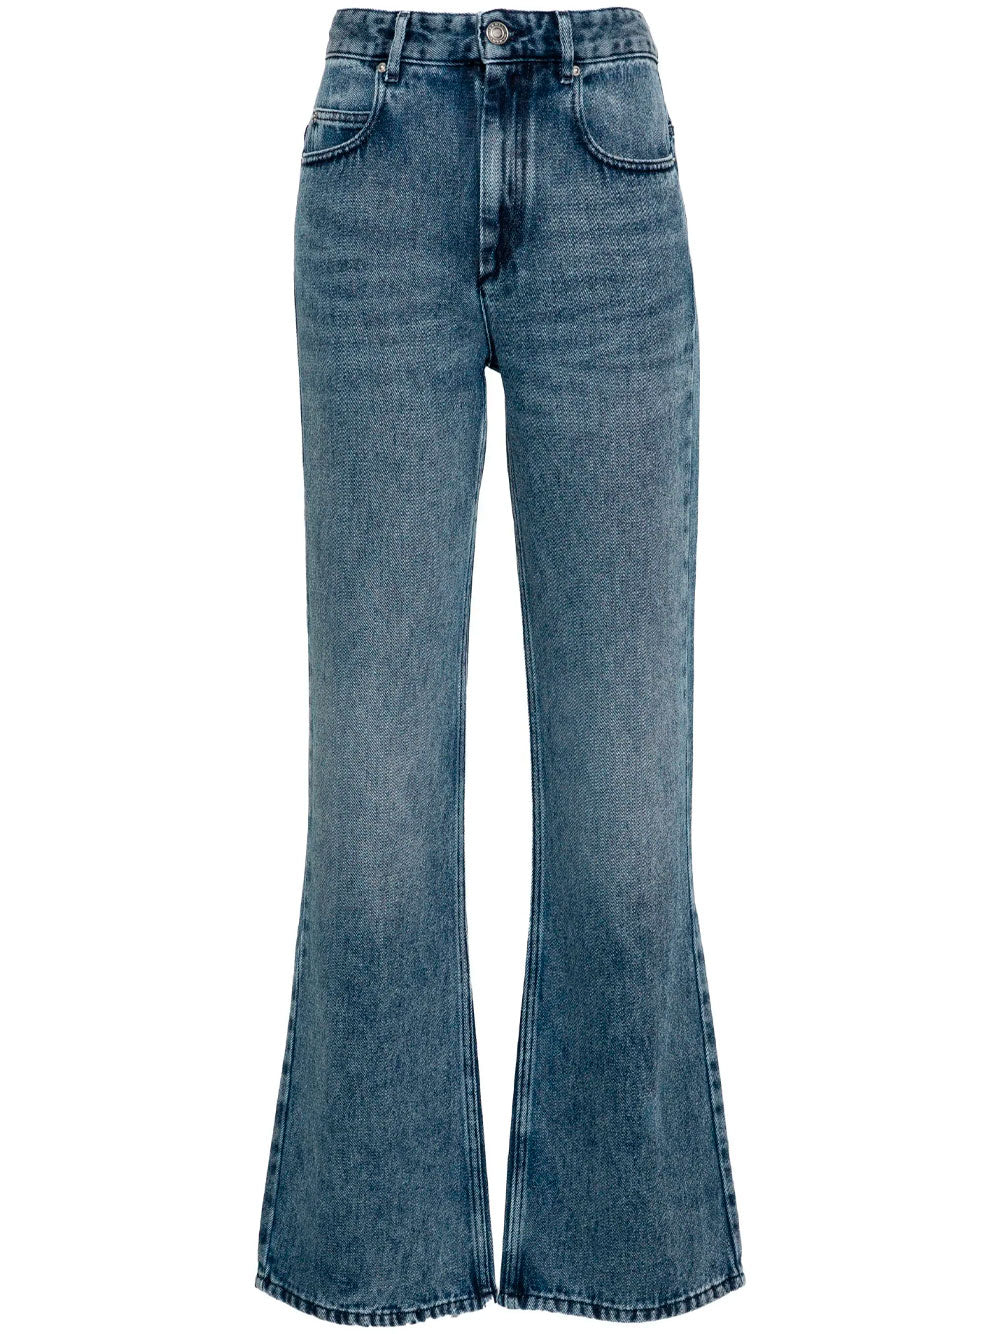 Belvira jeans